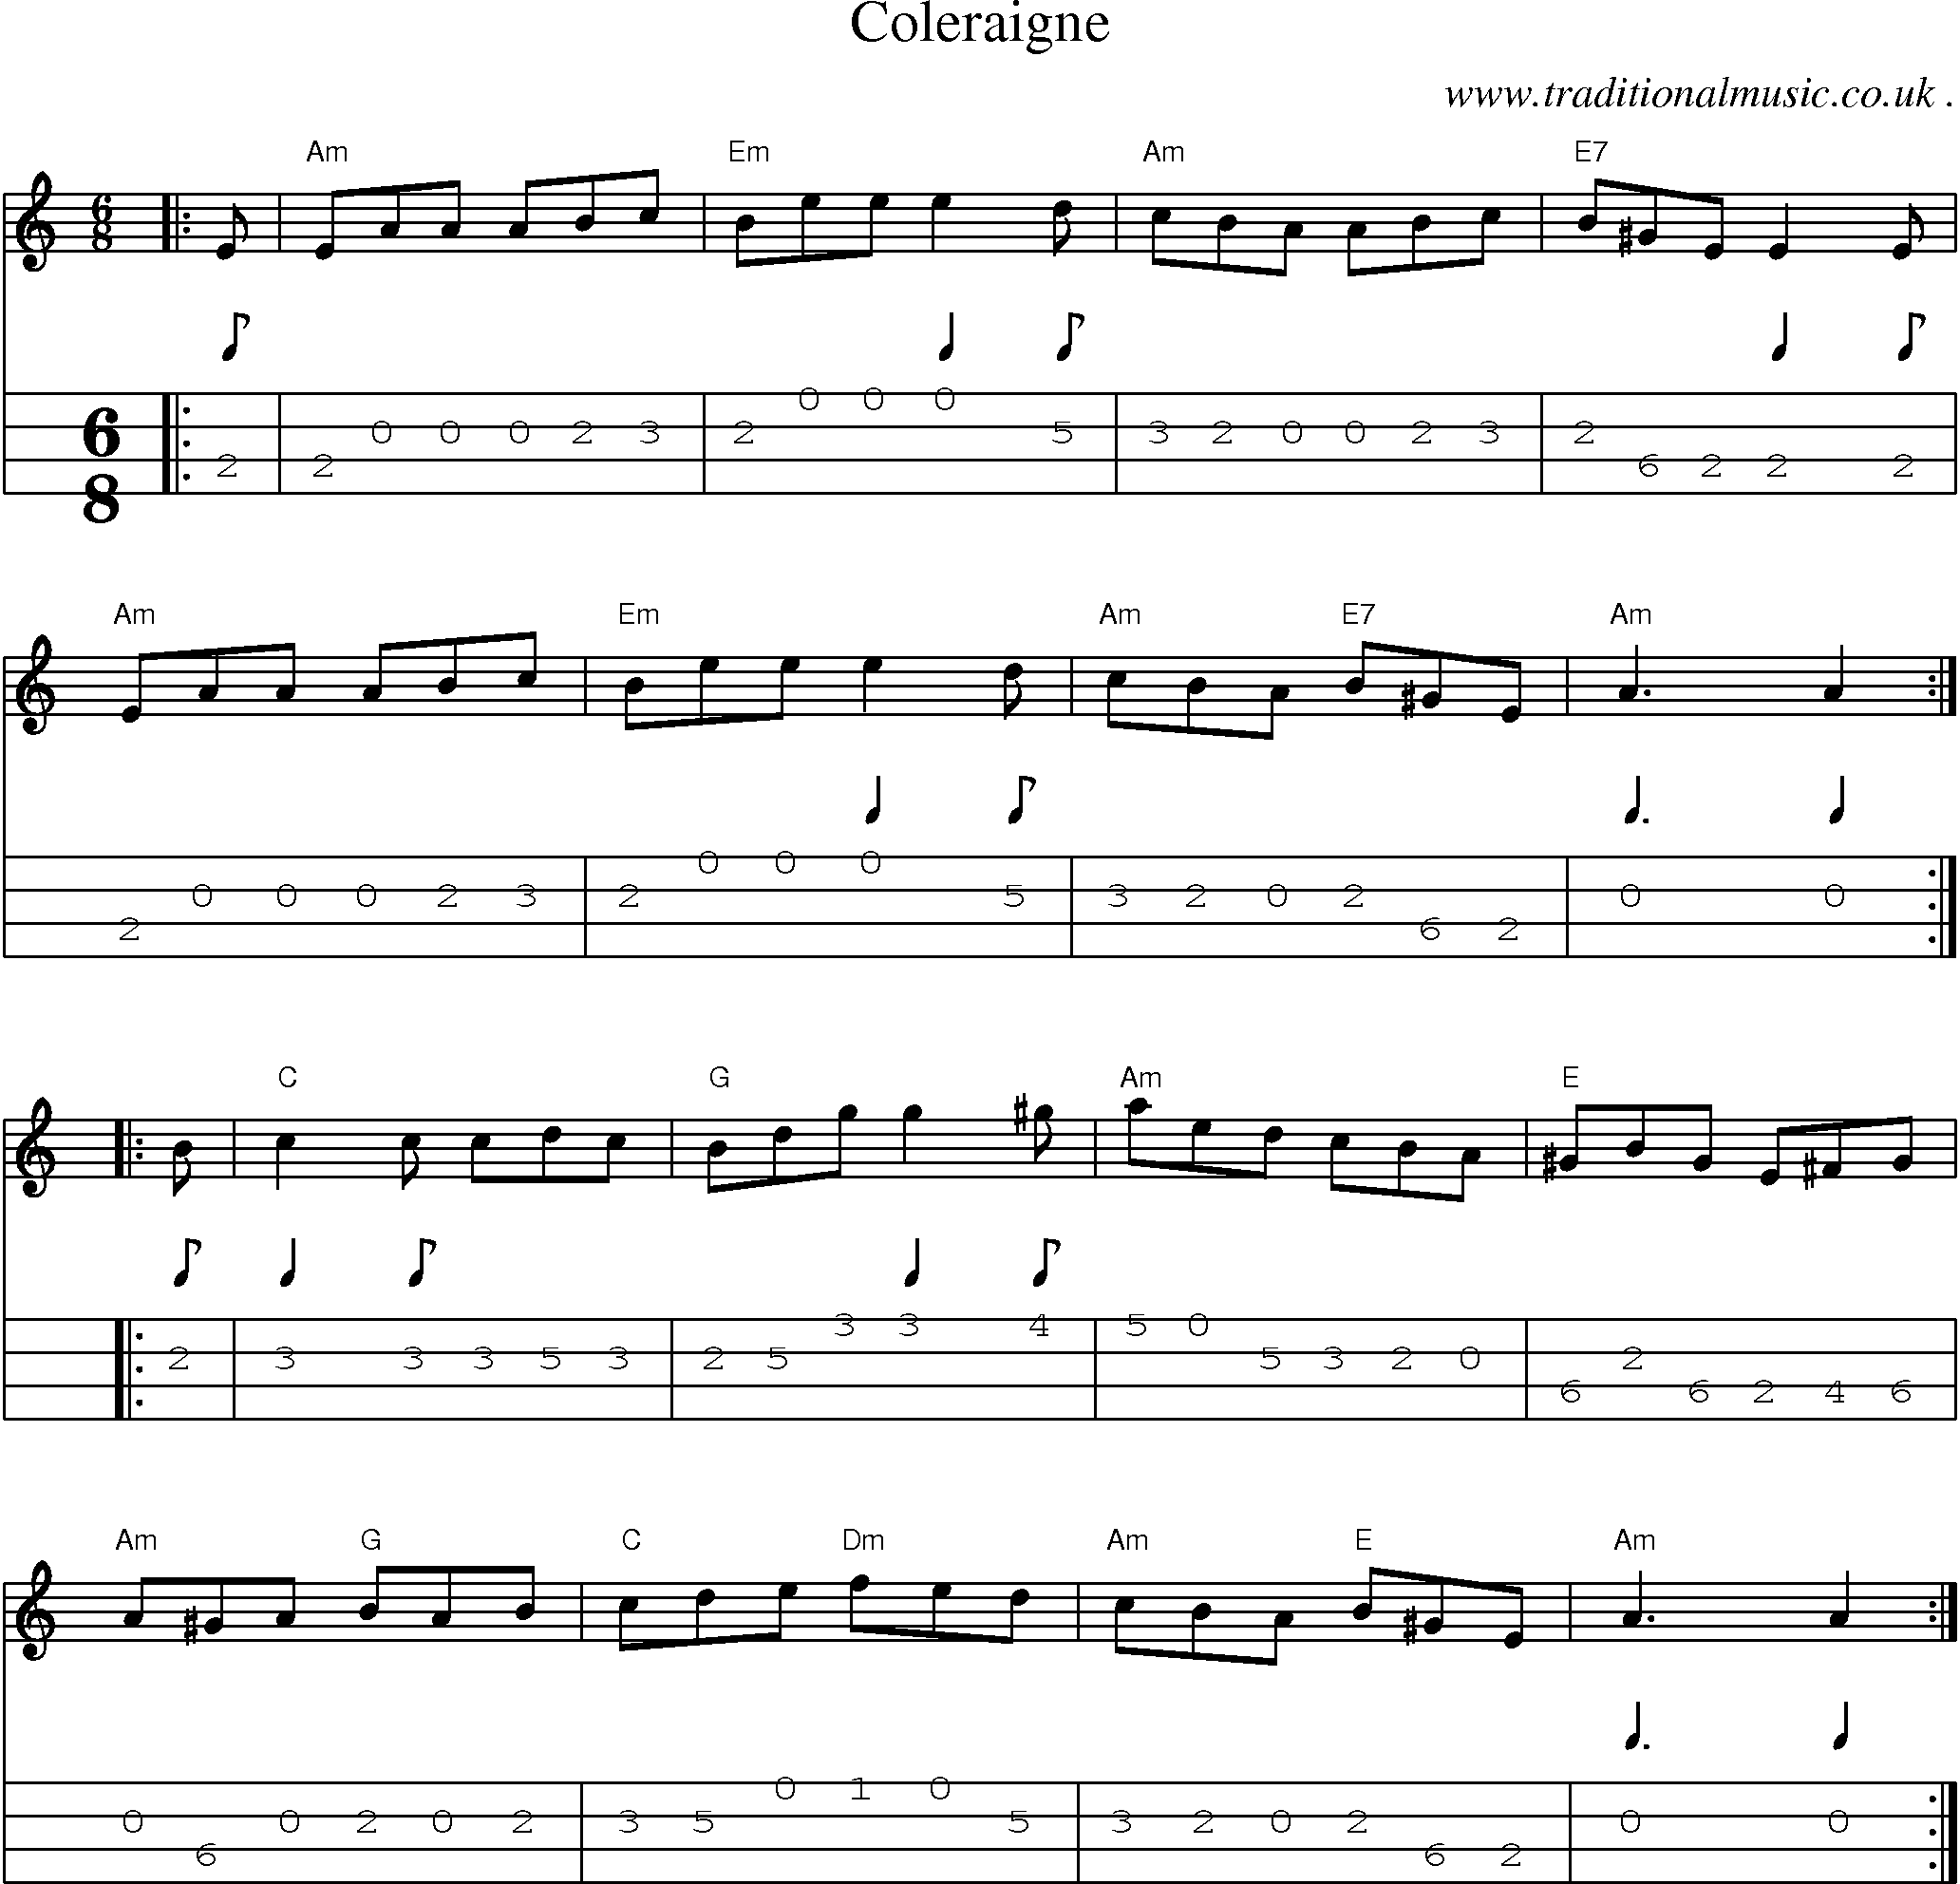 Music Score and Guitar Tabs for Coleraigne